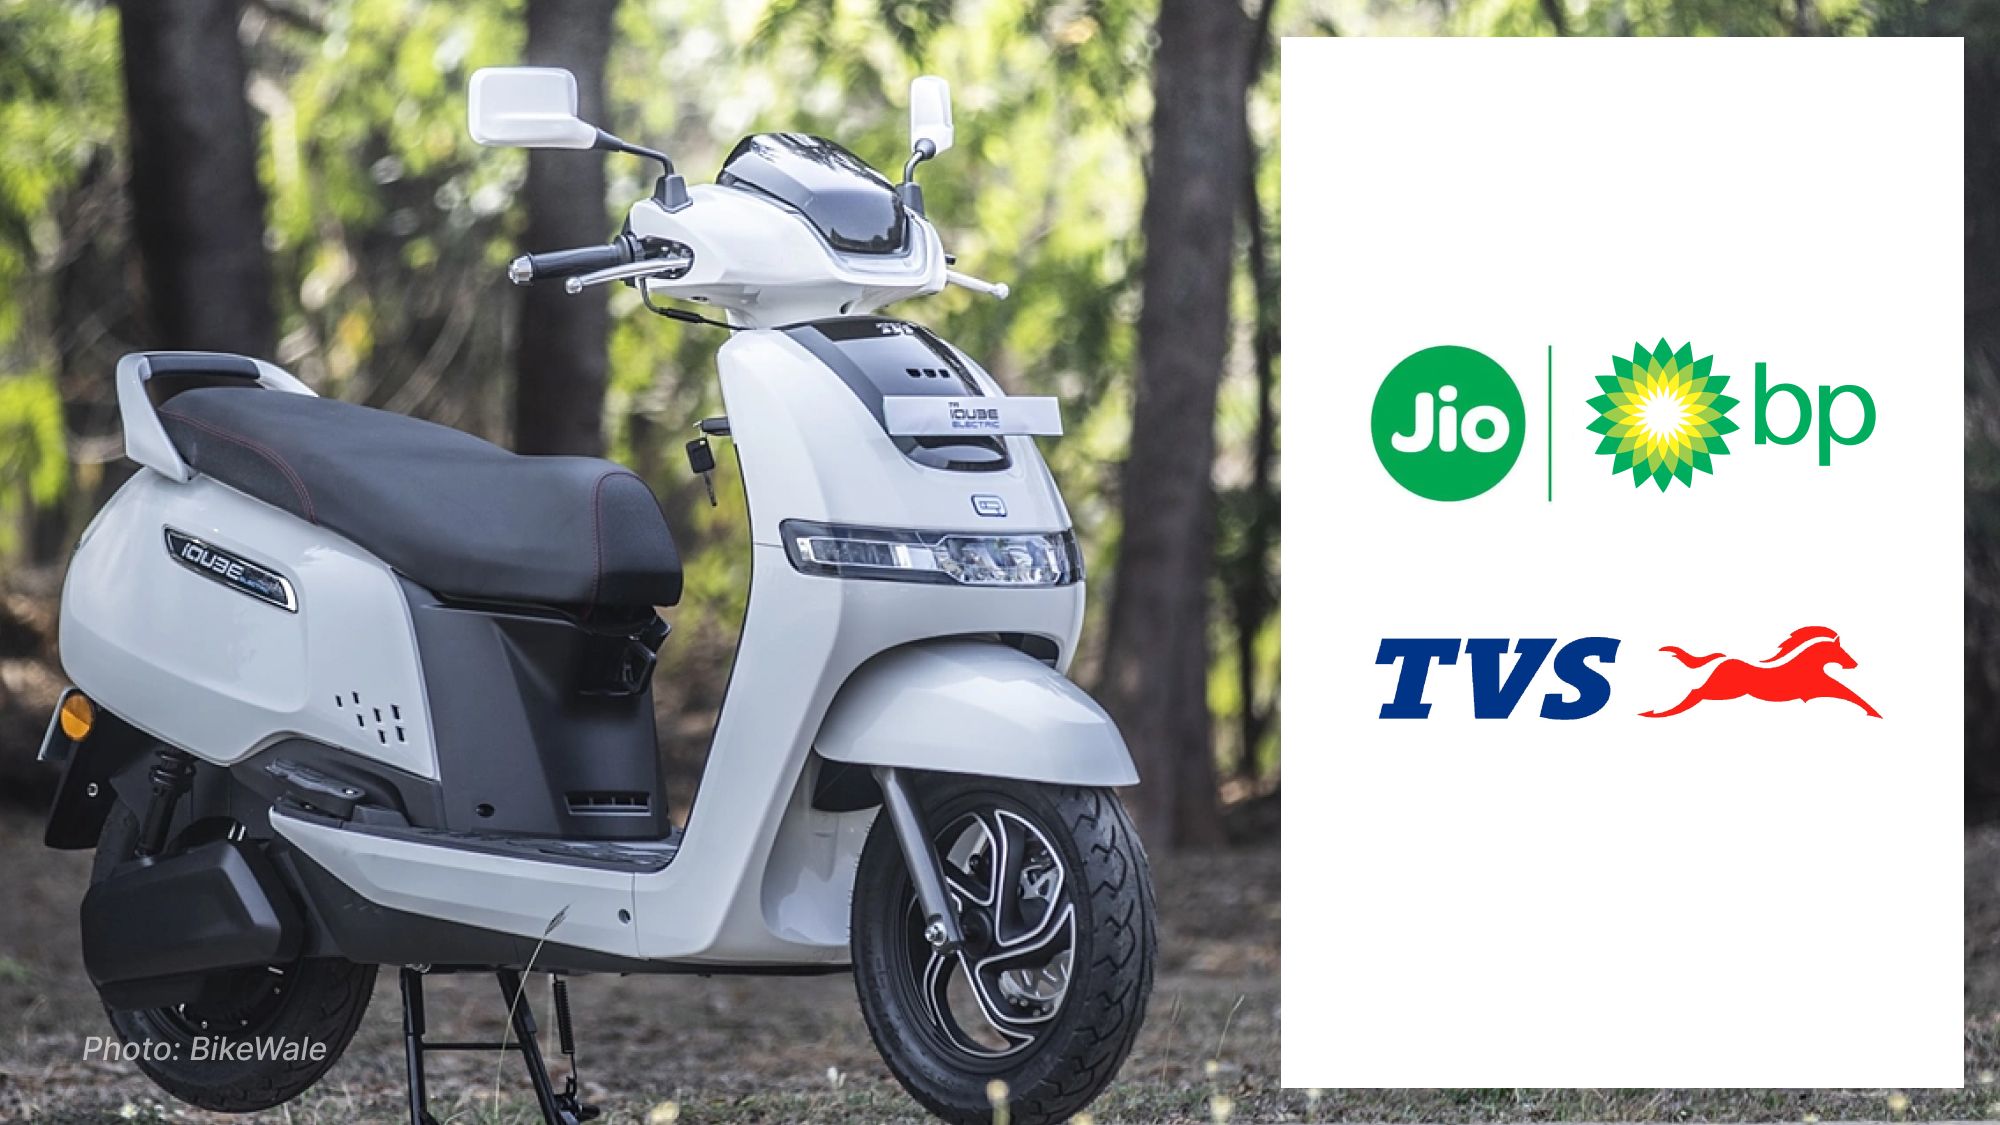 TVS Motor And Jio-bp Tie Up For EV Charging Platforms